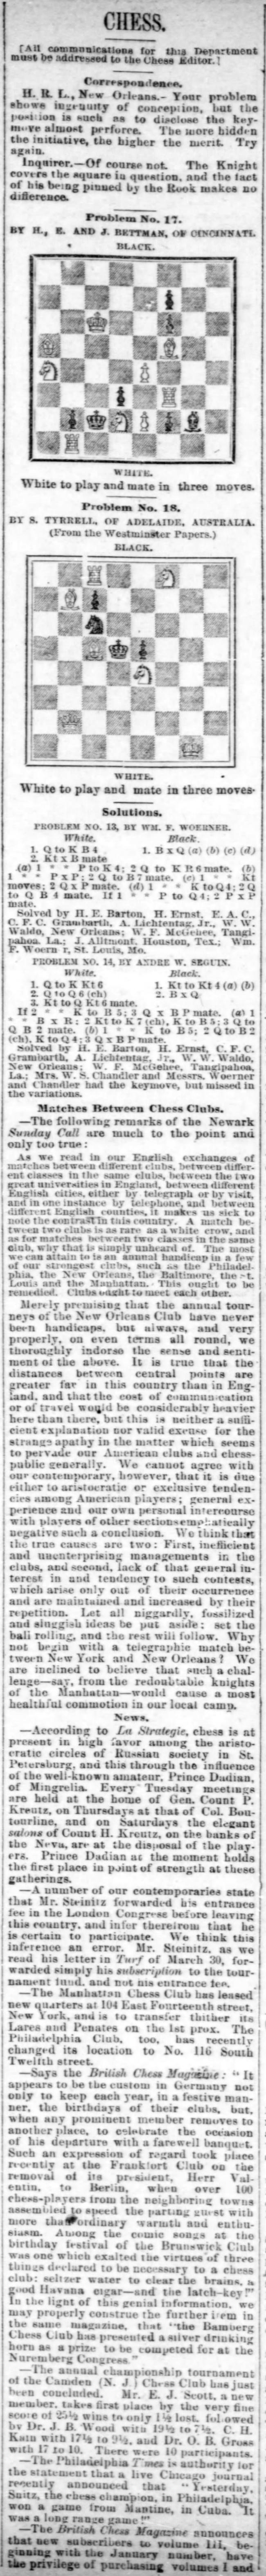 1883.04.29-01 New Orleans Times-Democrat.jpg